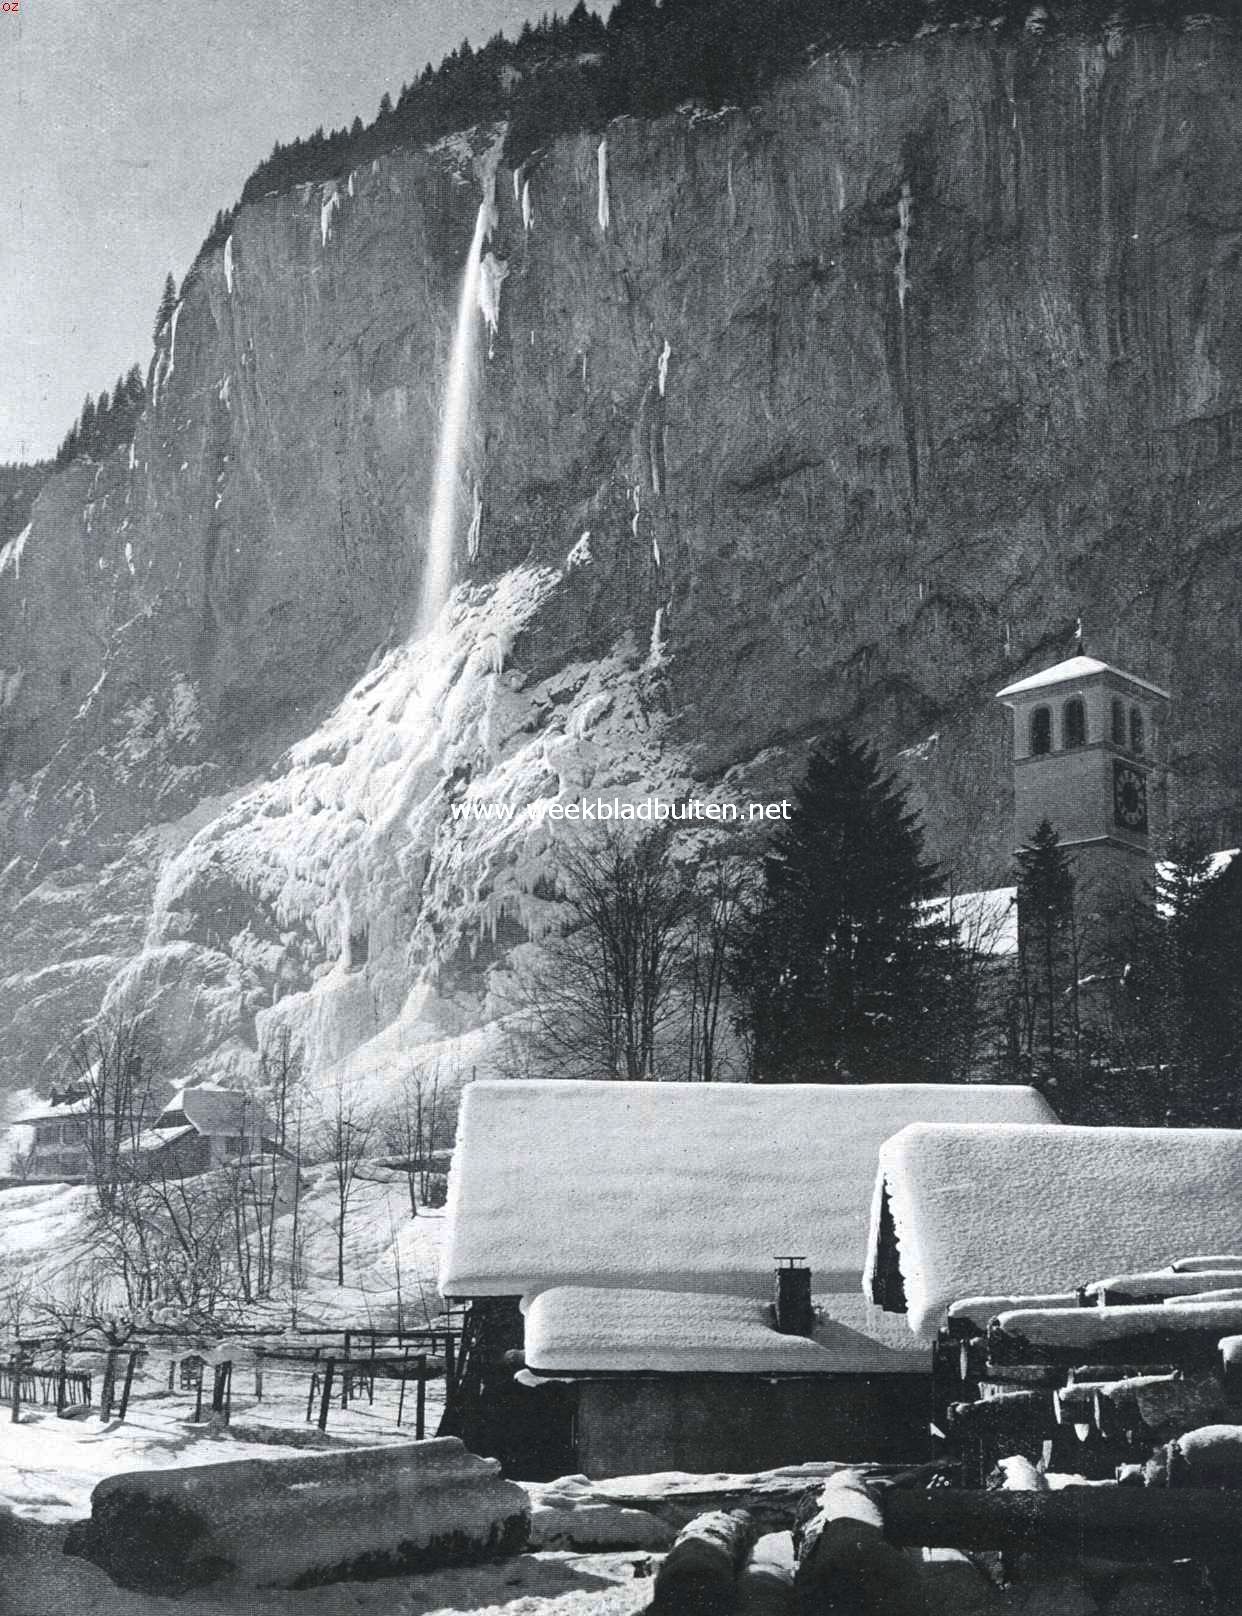 Winter in de bergen. De Staubach in het Lauterbrunnendal